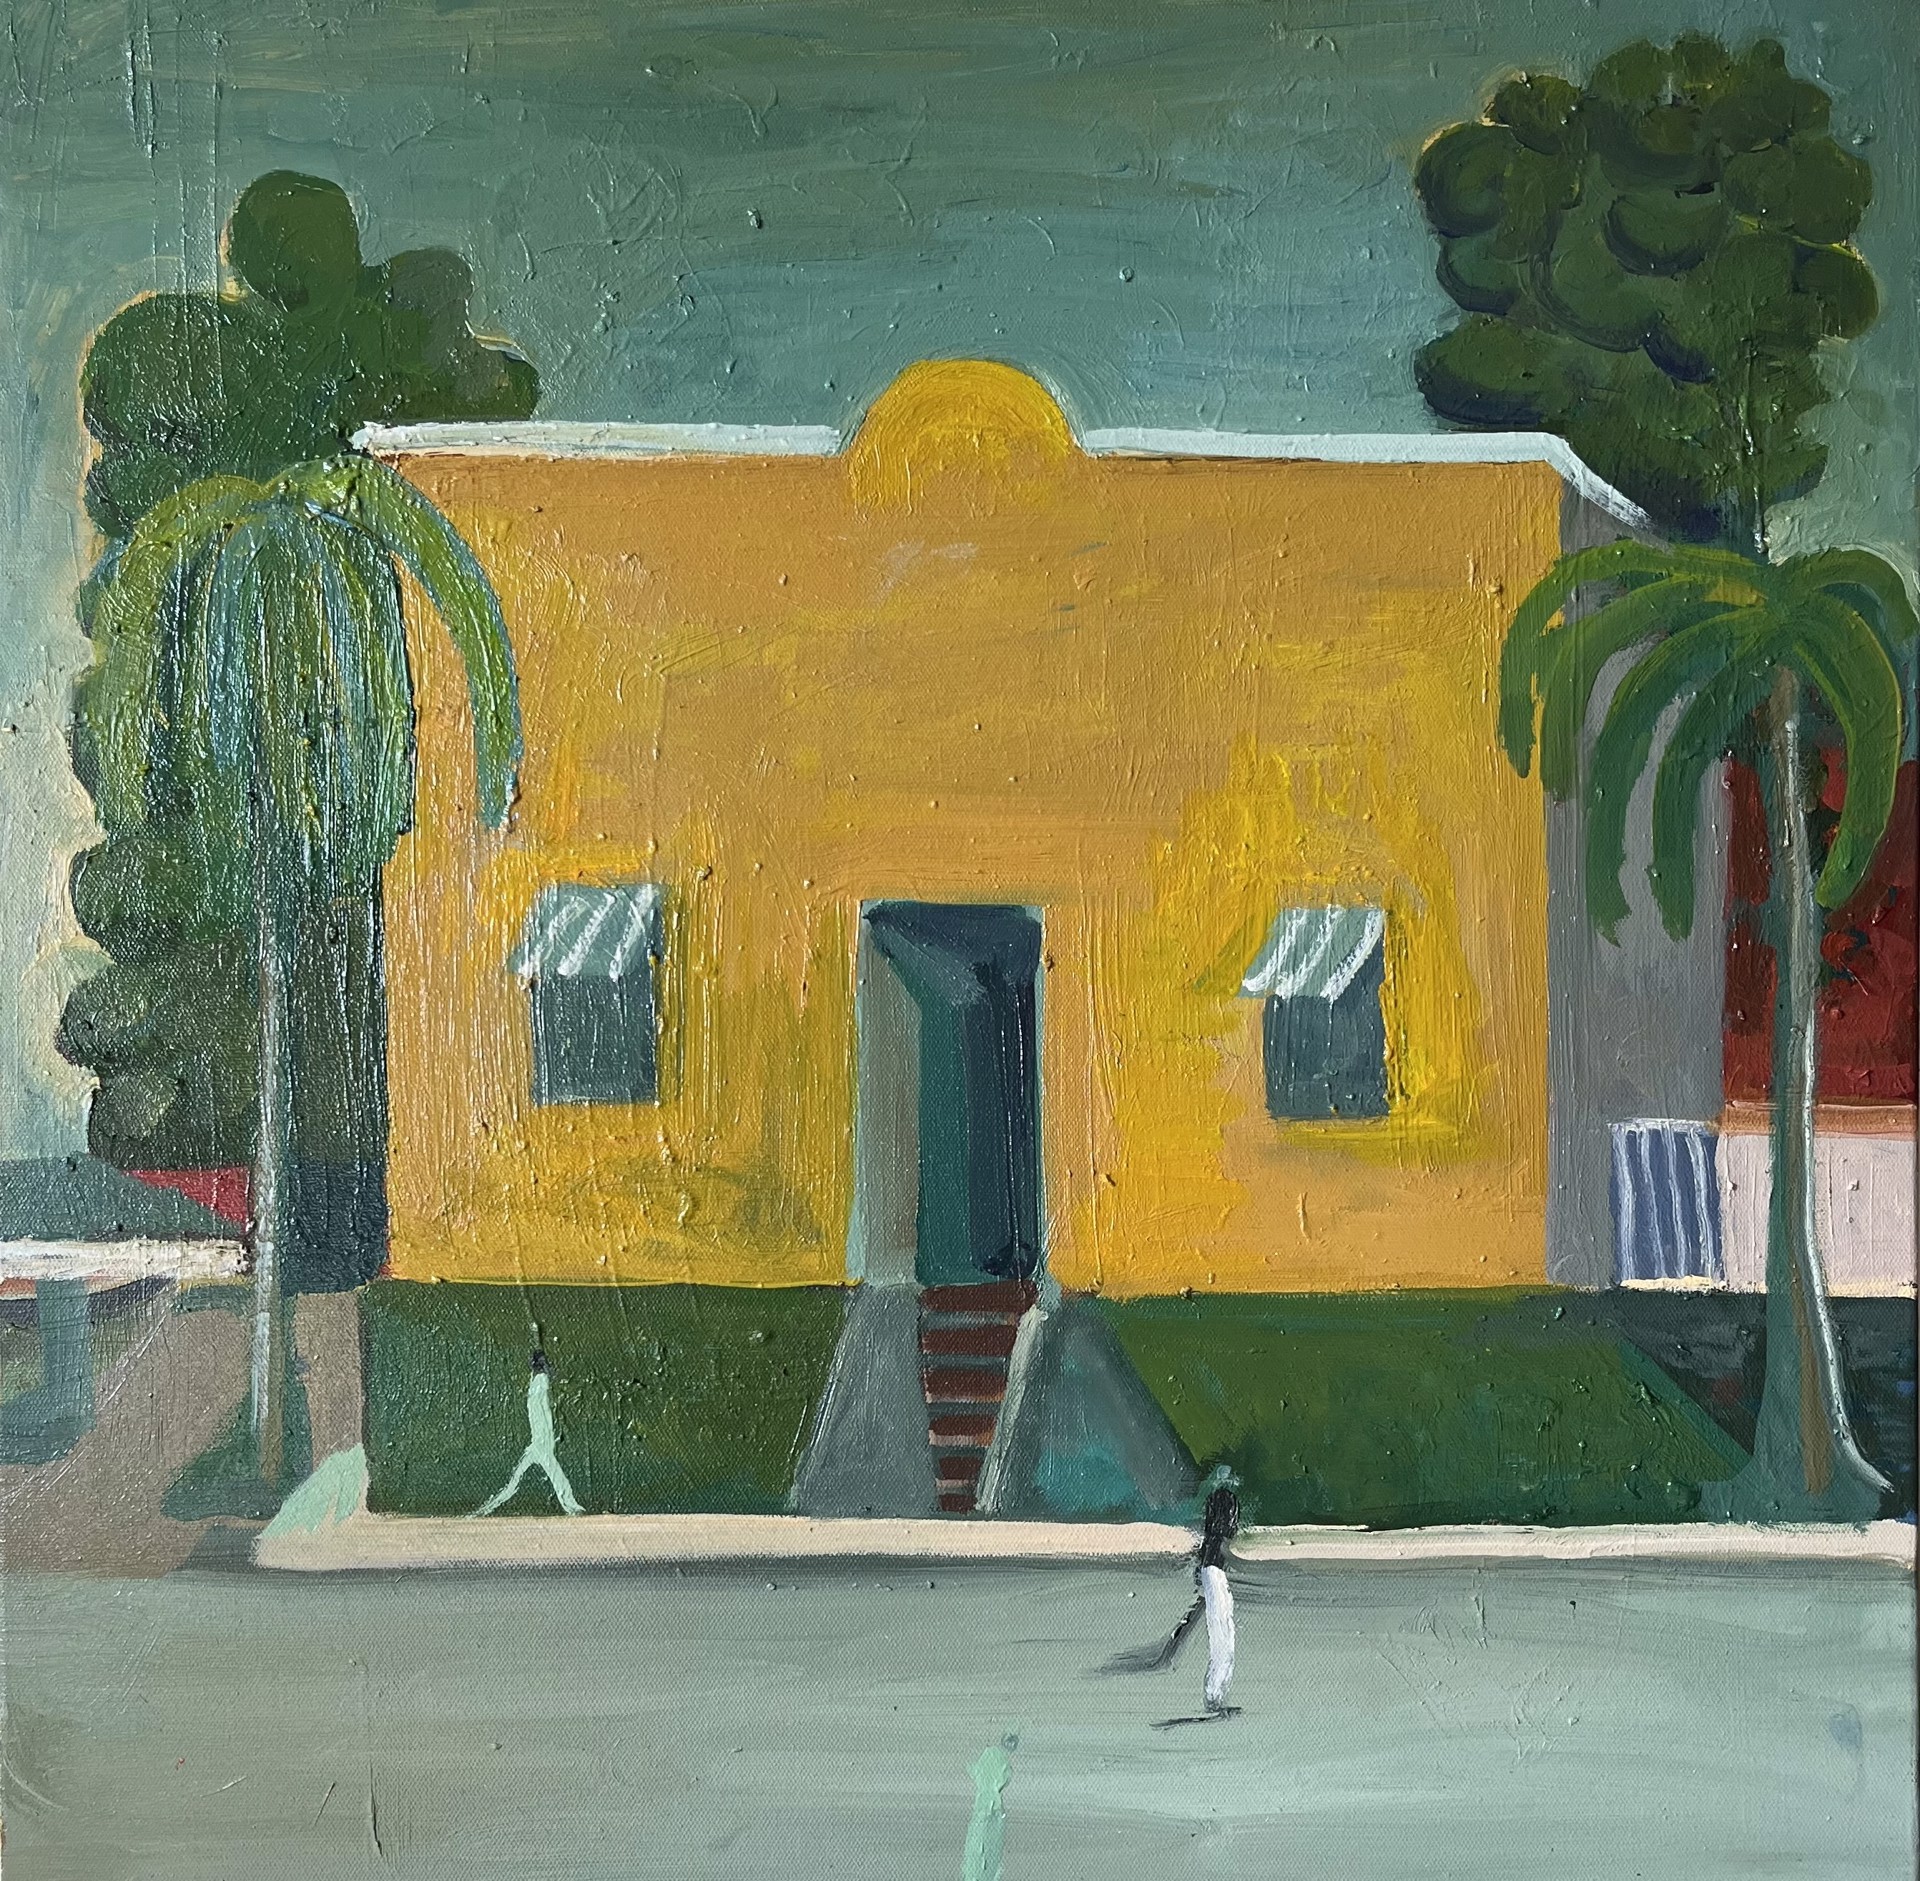 La Casa Amarilla (The Yellow House) by Alejandro Rubio